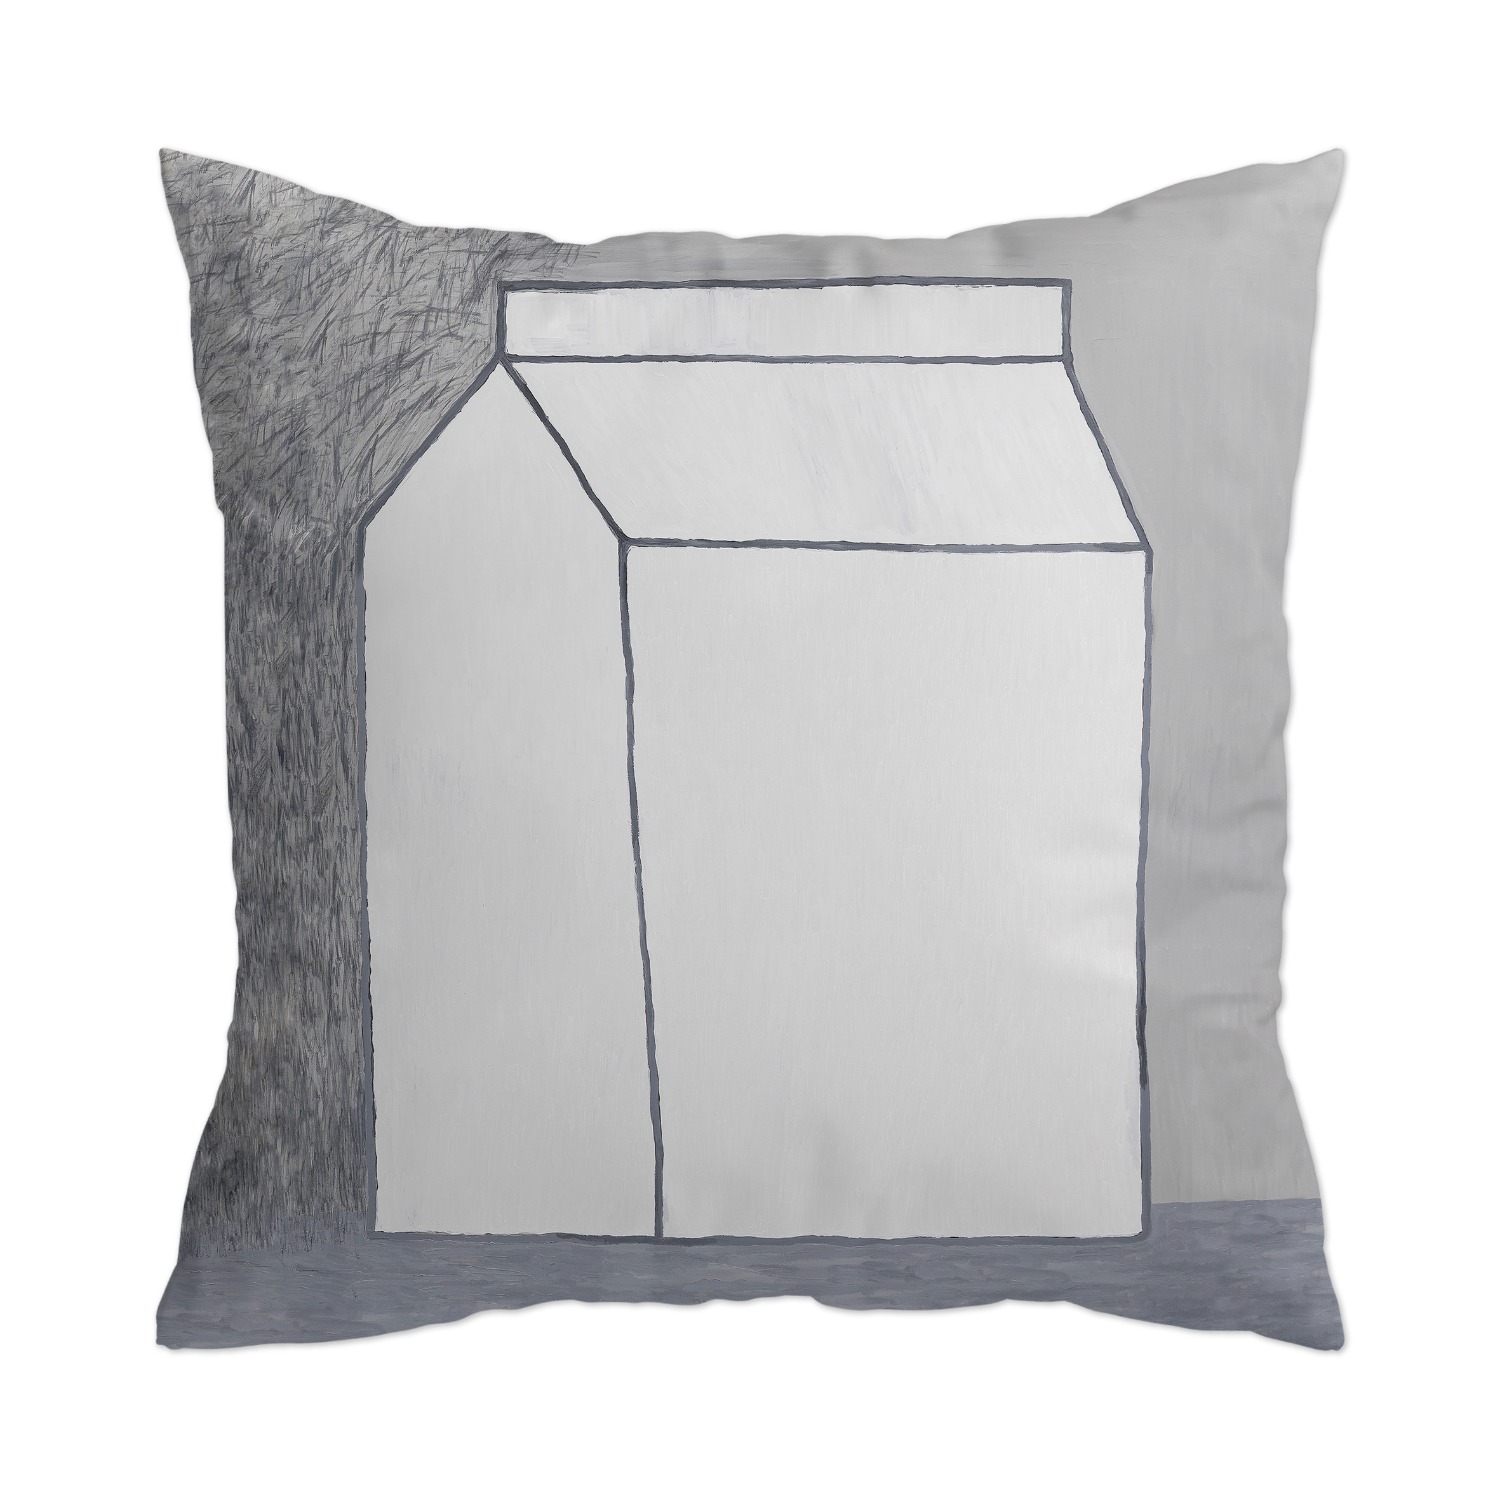 [a.o.b] Milk house cushion